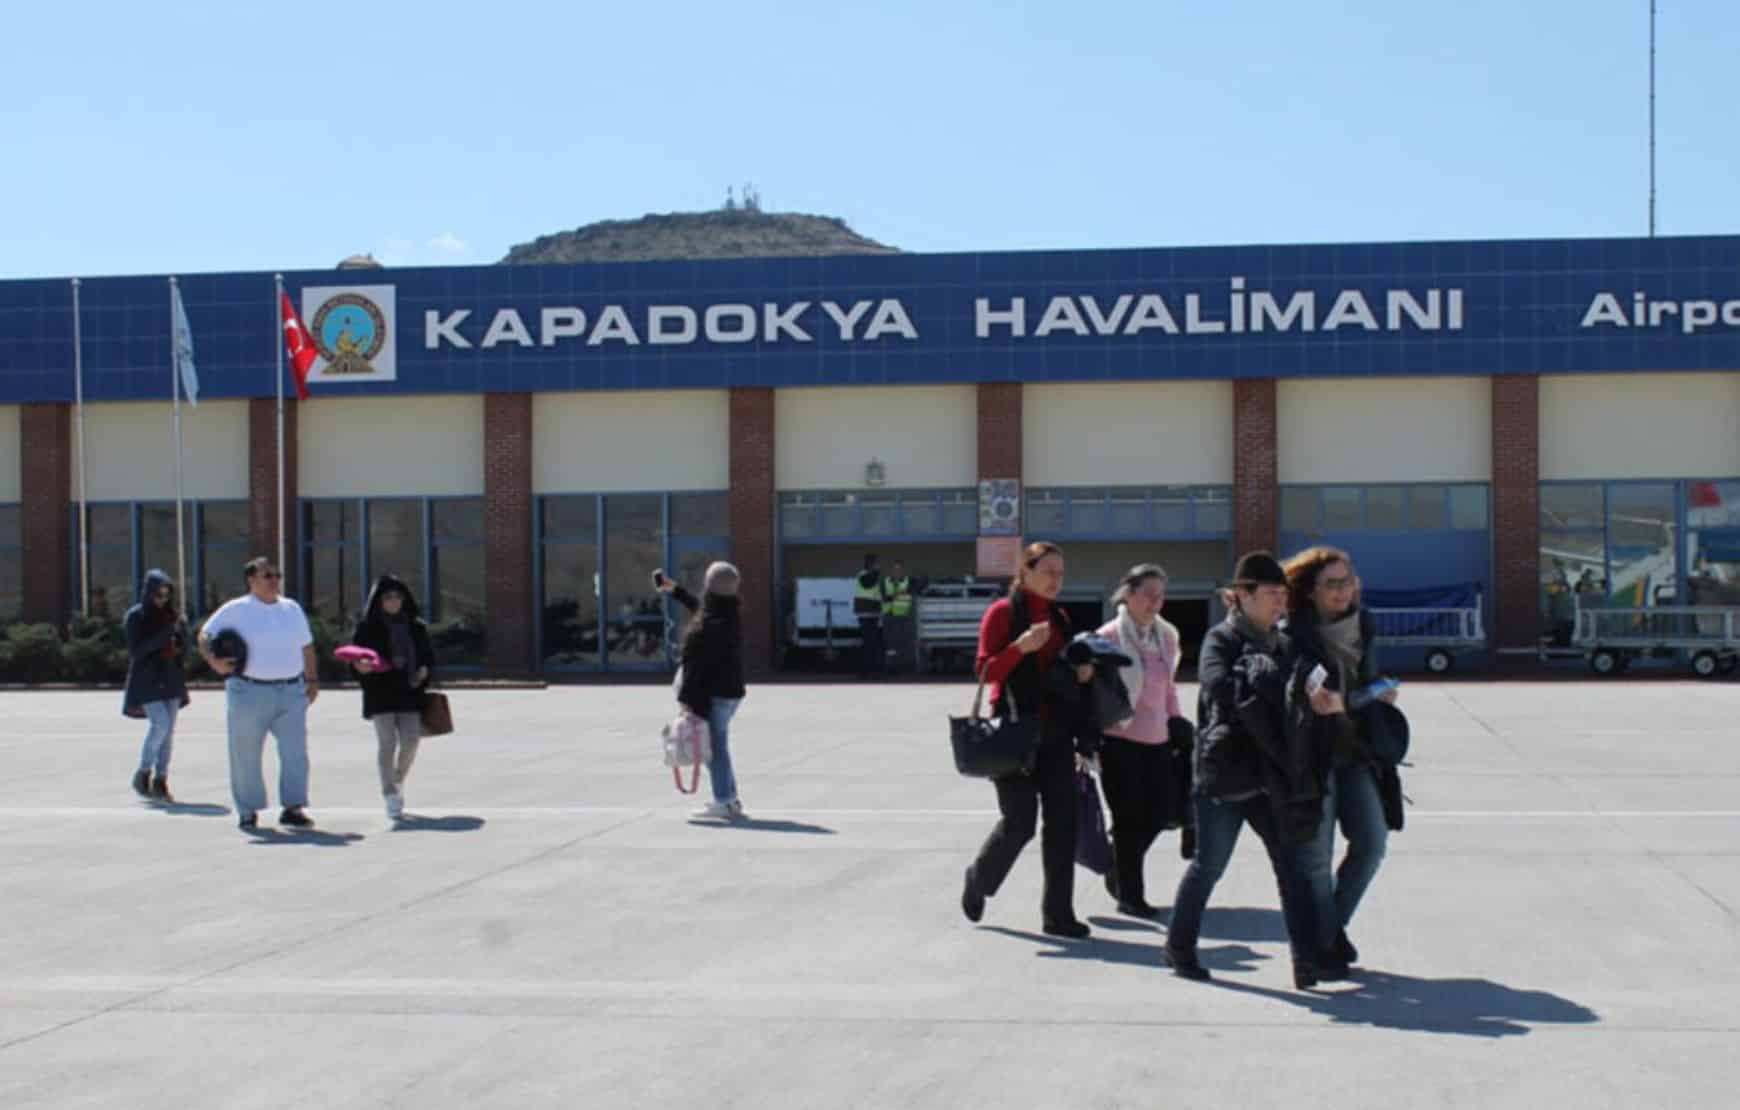 Nevsehir Kapadokya Airport